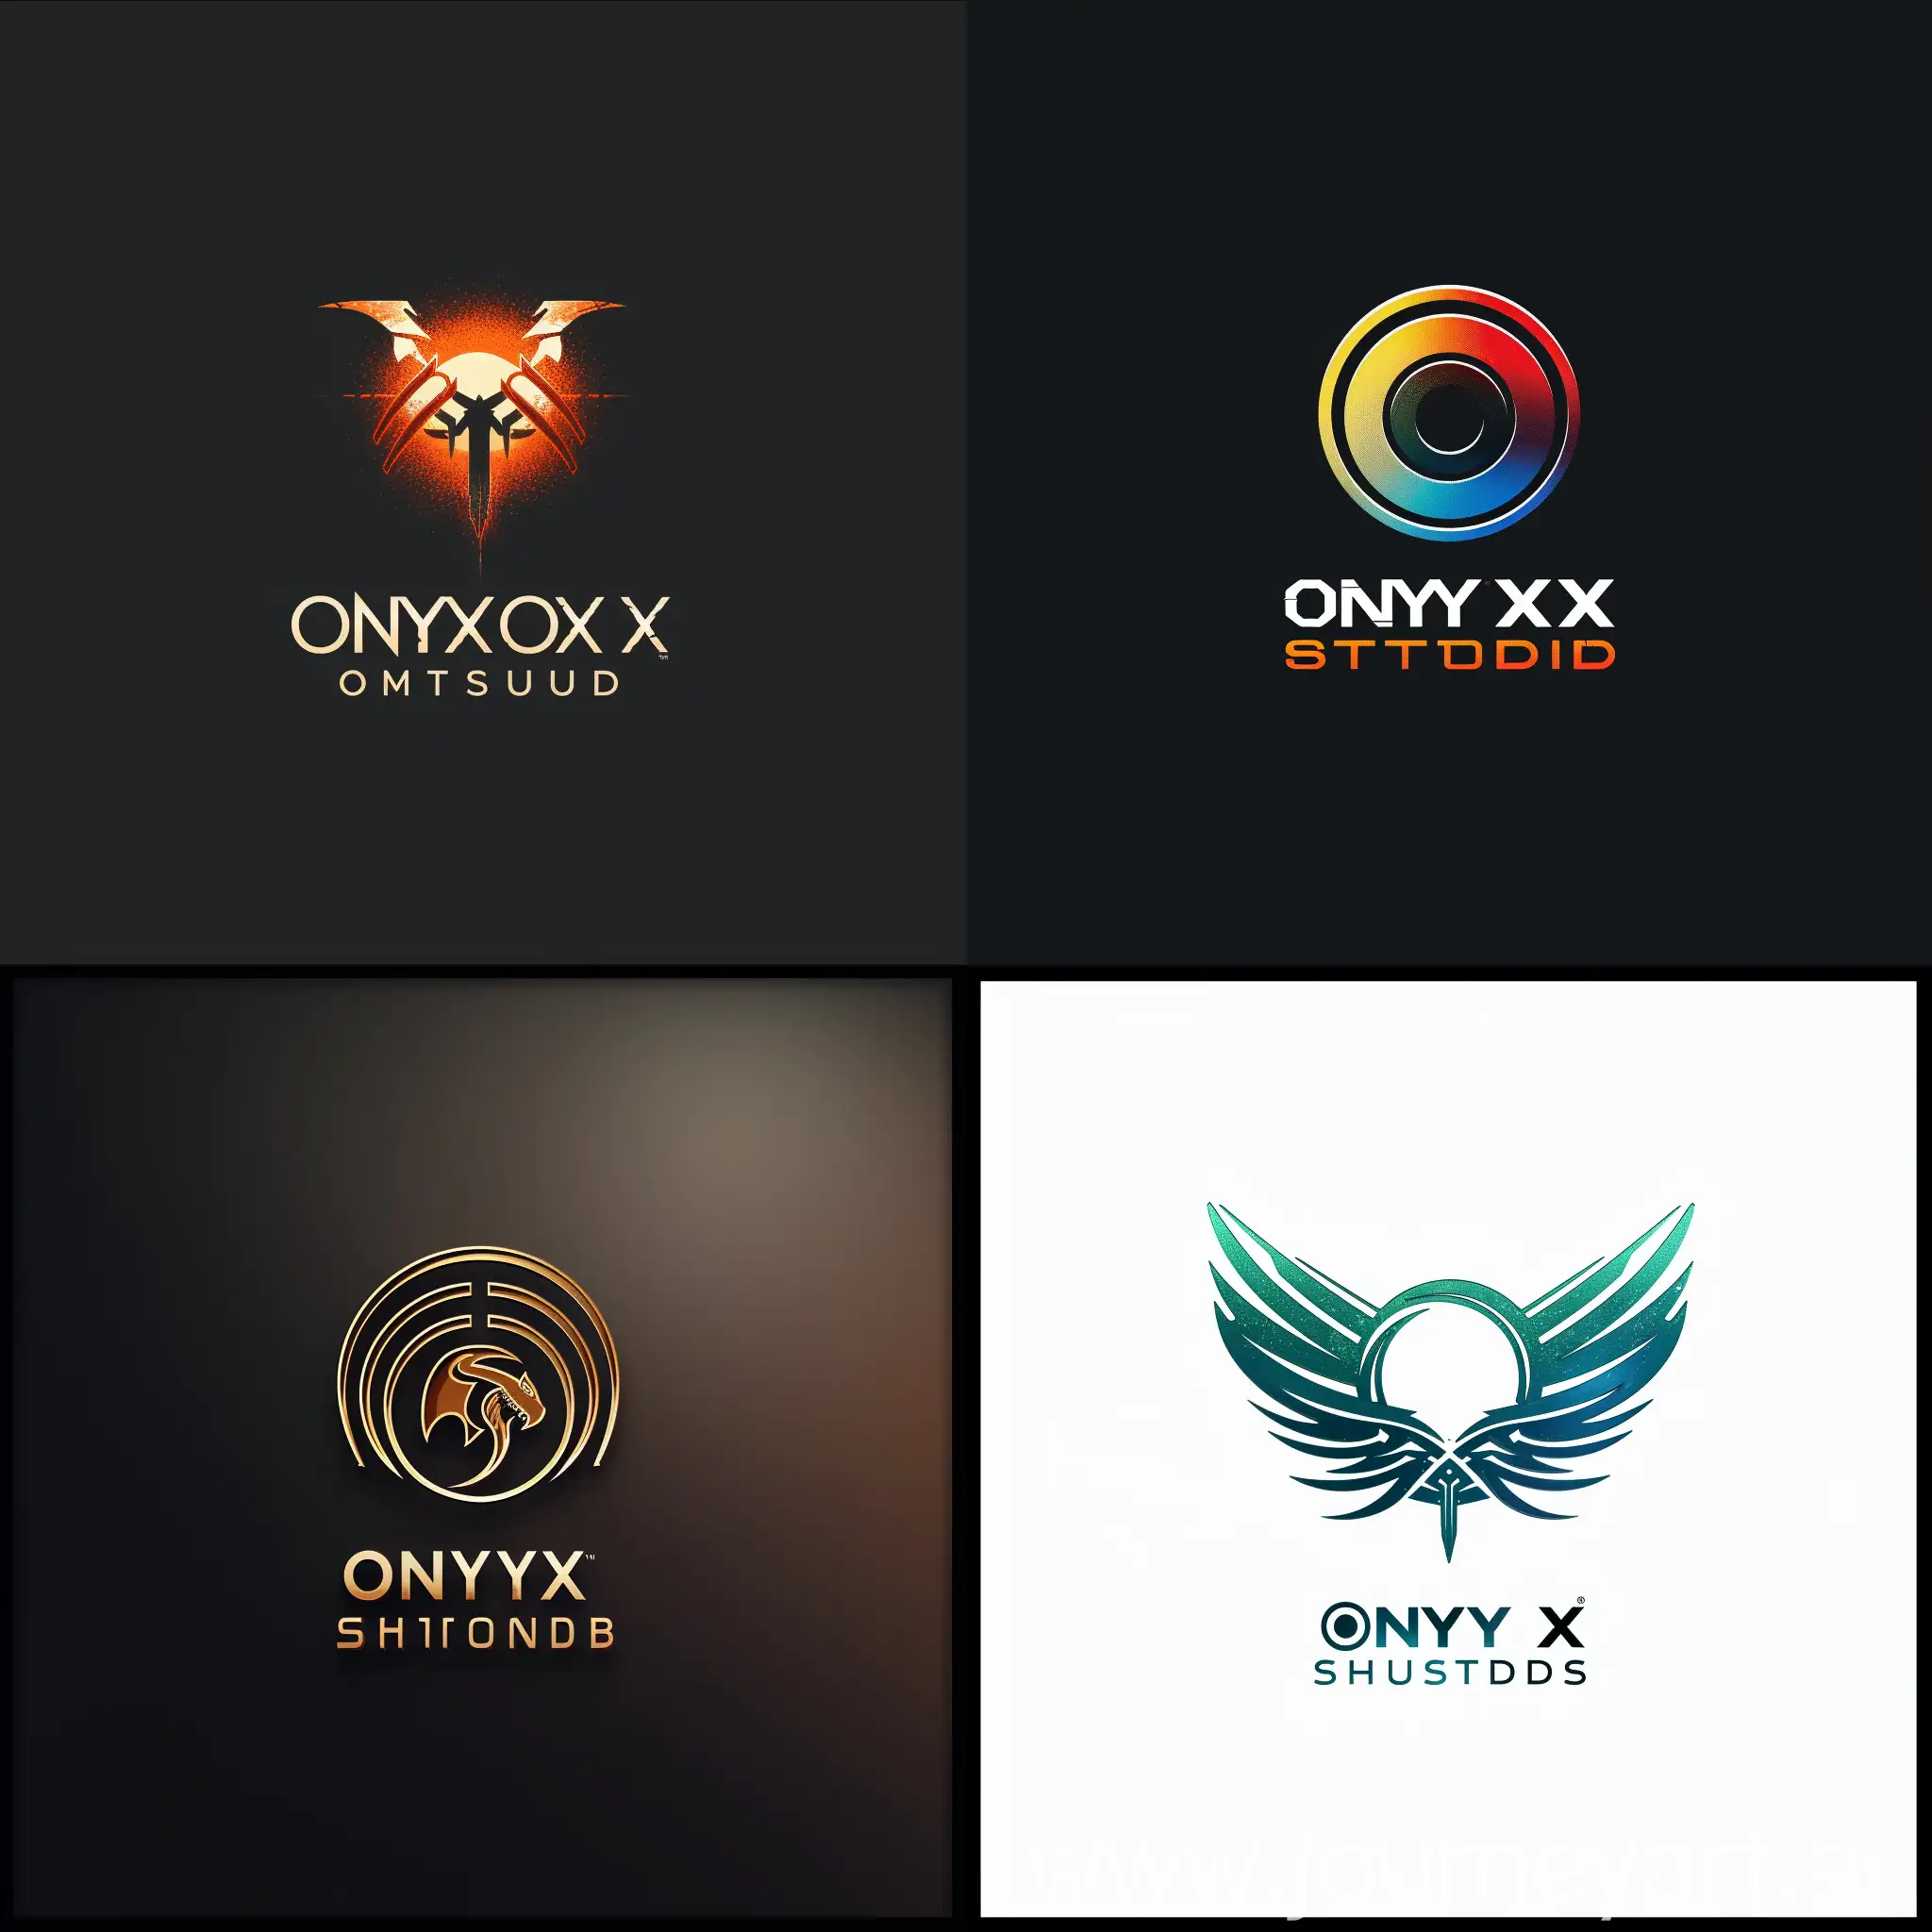 A small logo for a Game Dev studio called "Onyx Horizon Studios"